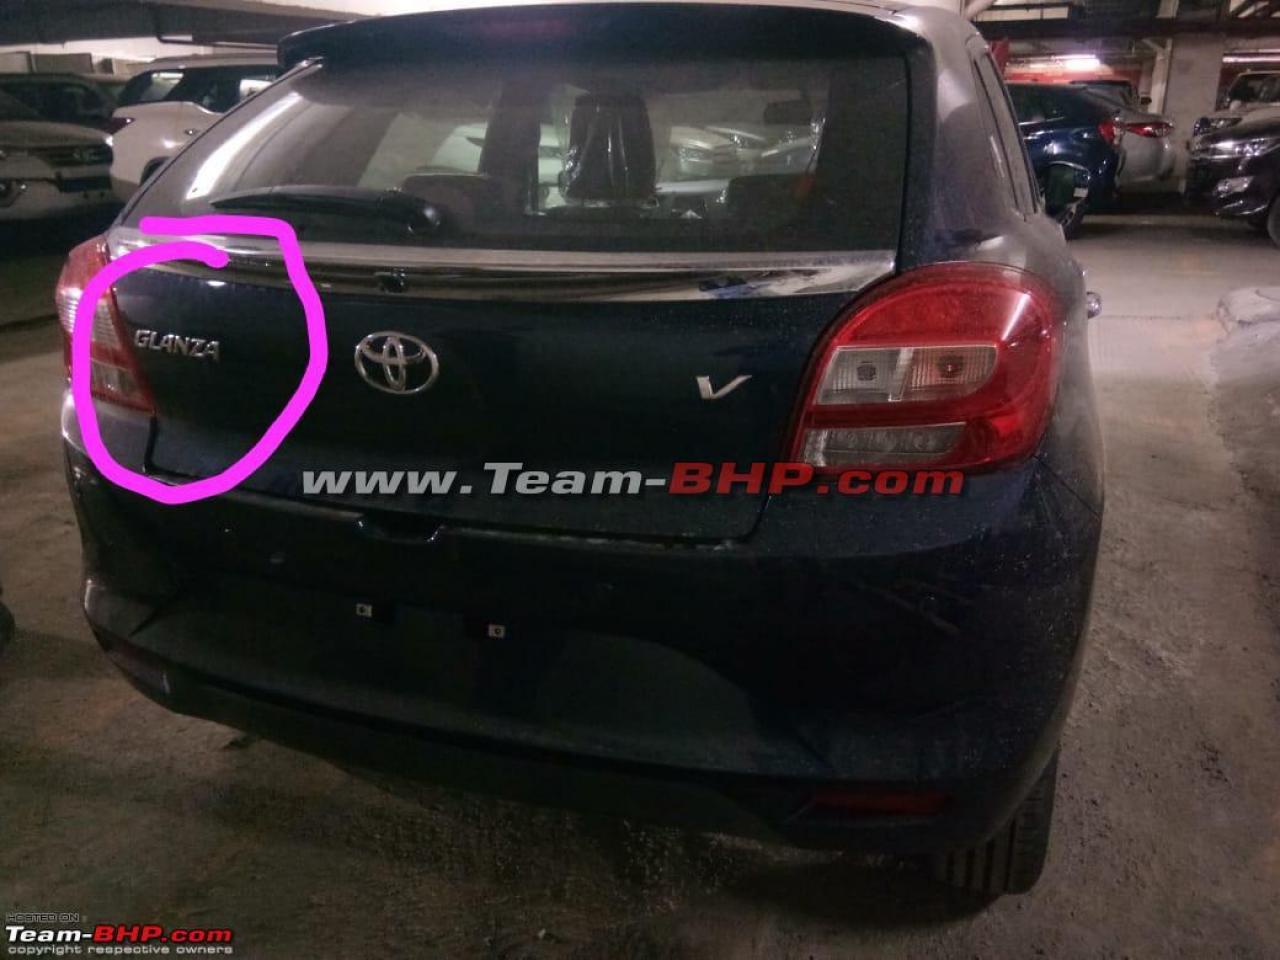 Toyota Glanza versi India (Team-BHP)